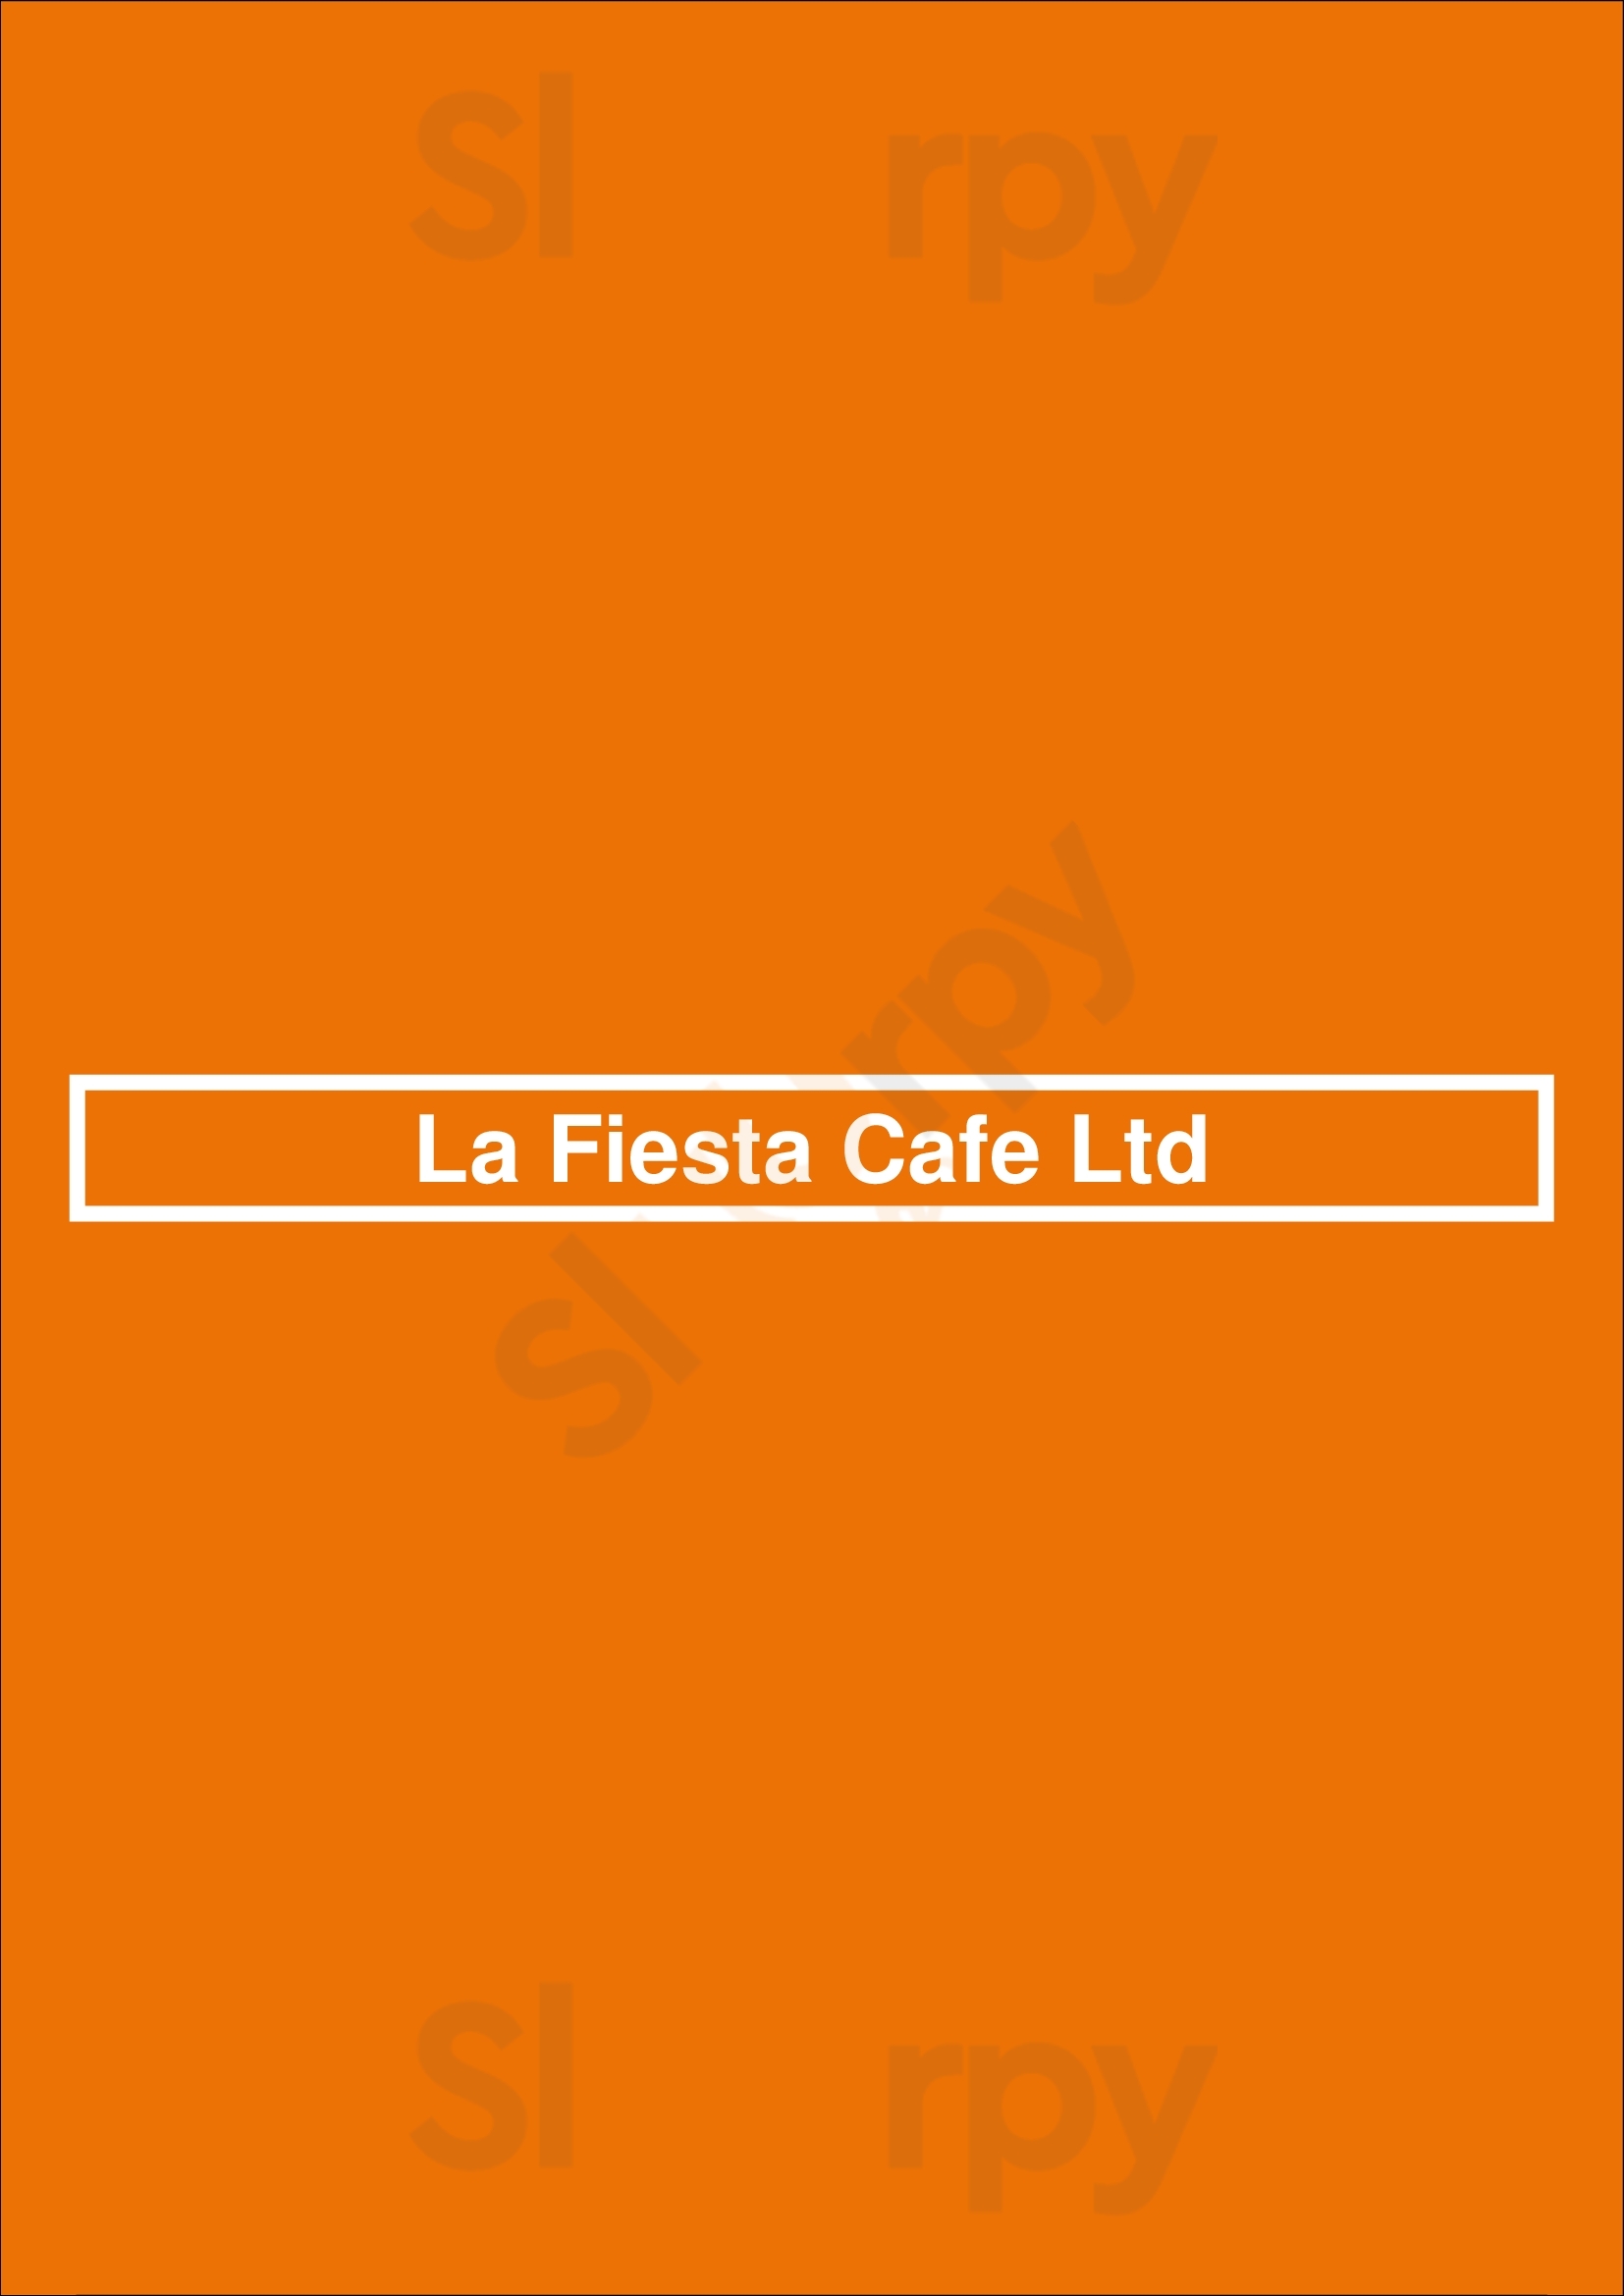 La Fiesta Cafe Ltd Victoria Menu - 1